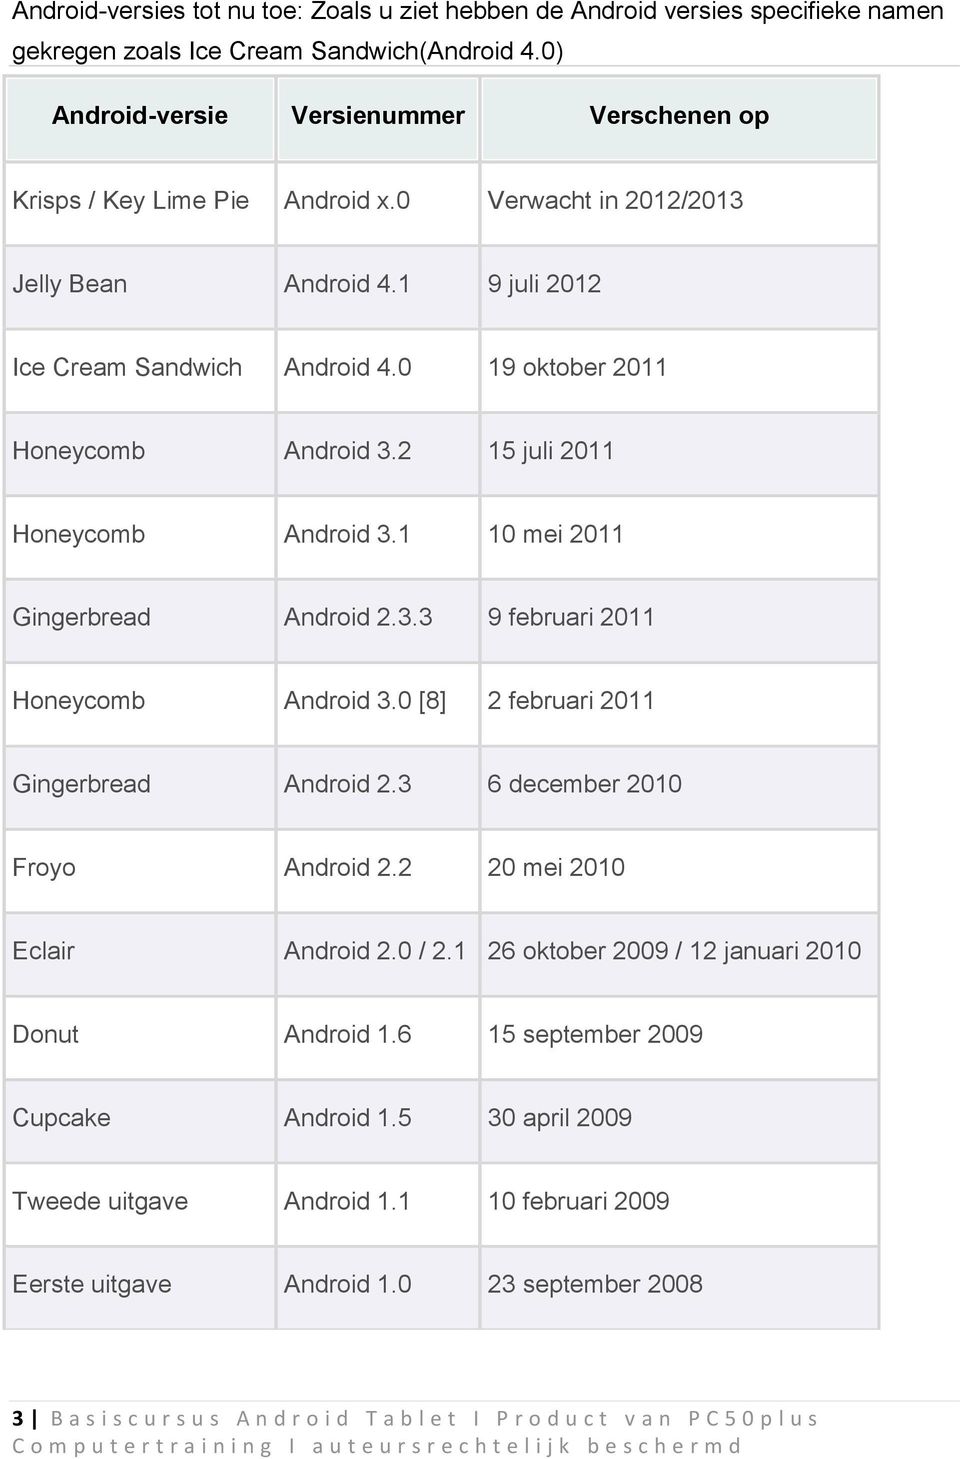 0 19 oktober 2011 Honeycomb Android 3.2 15 juli 2011 Honeycomb Android 3.1 10 mei 2011 Gingerbread Android 2.3.3 9 februari 2011 Honeycomb Android 3.0 [8] 2 februari 2011 Gingerbread Android 2.